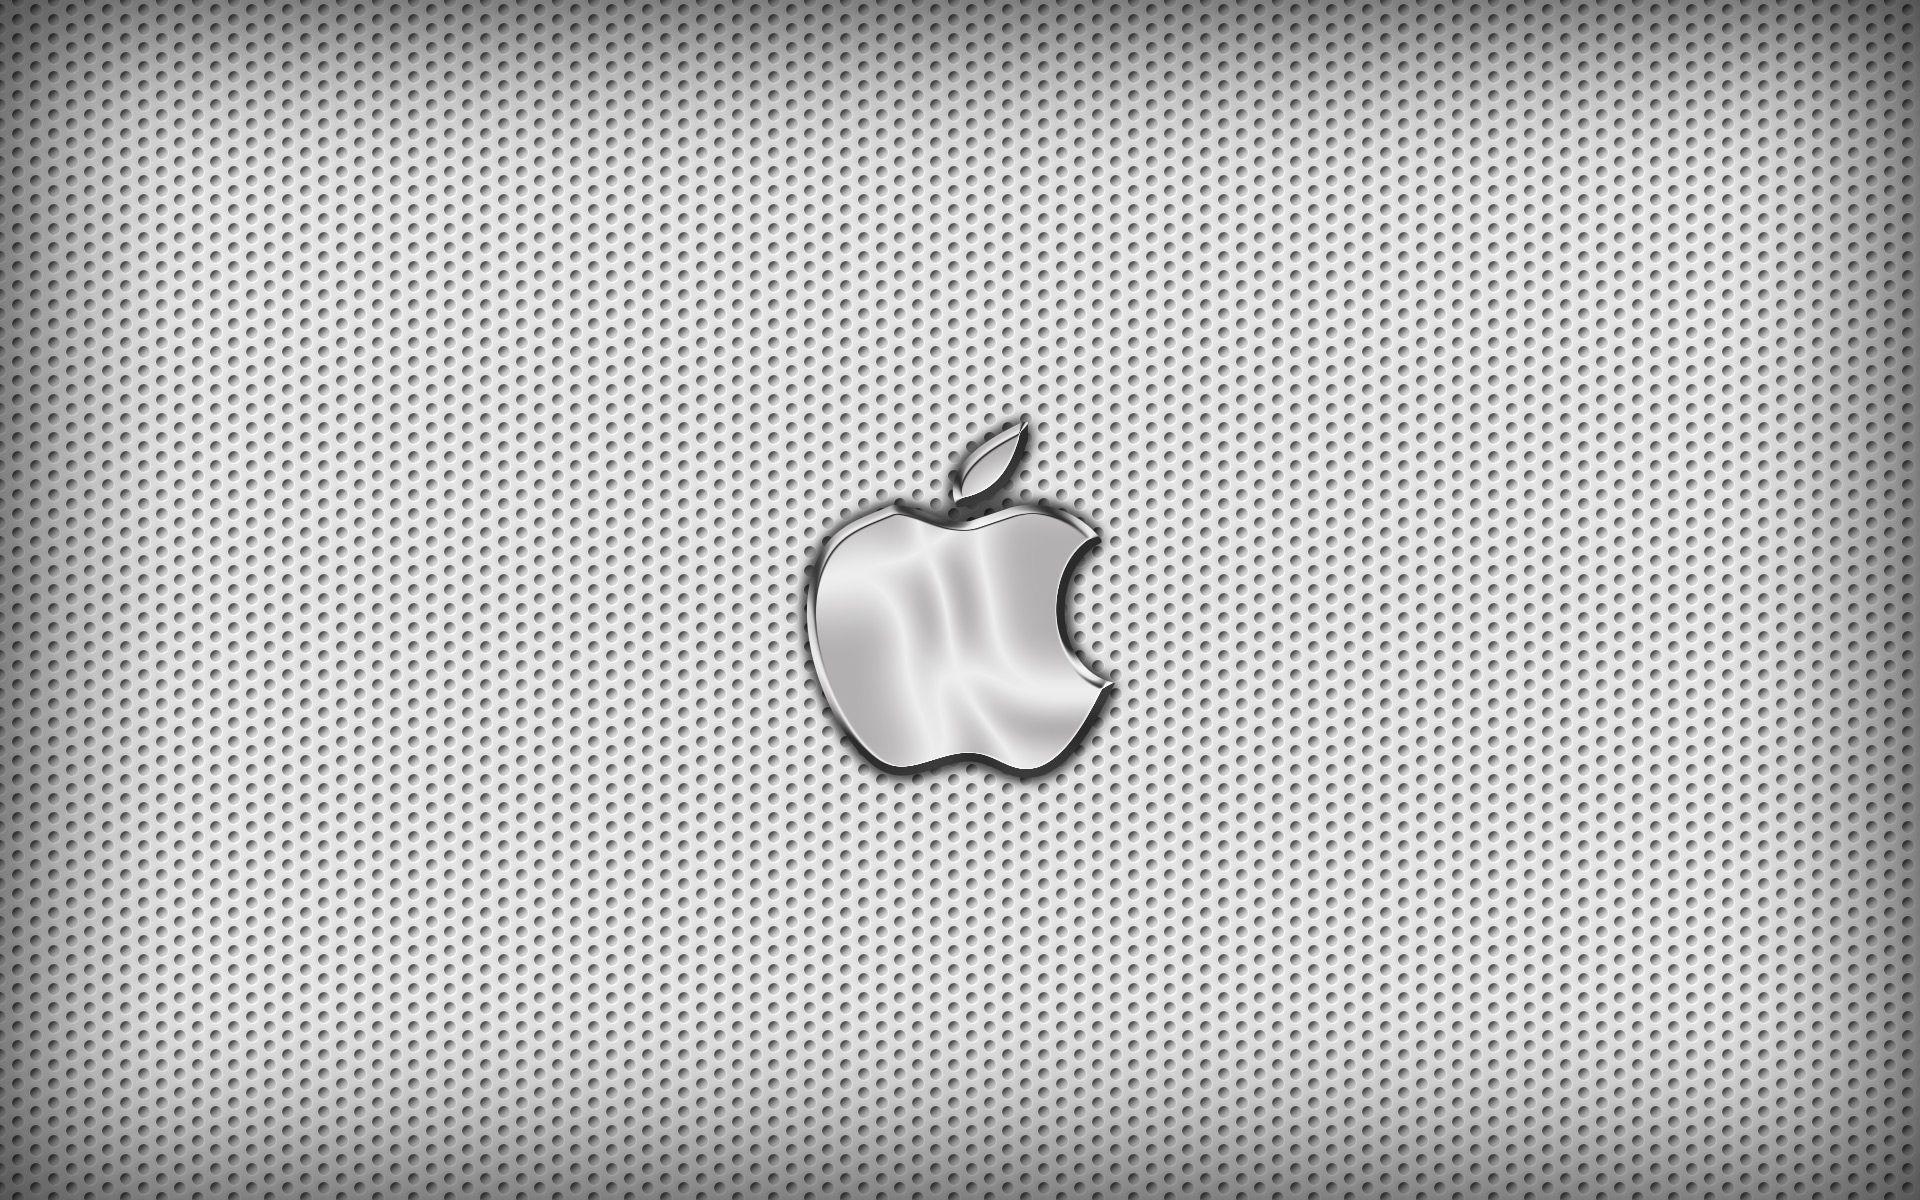 Chrome Apple Logo On Black Background iPhone Wallpaper. Metal